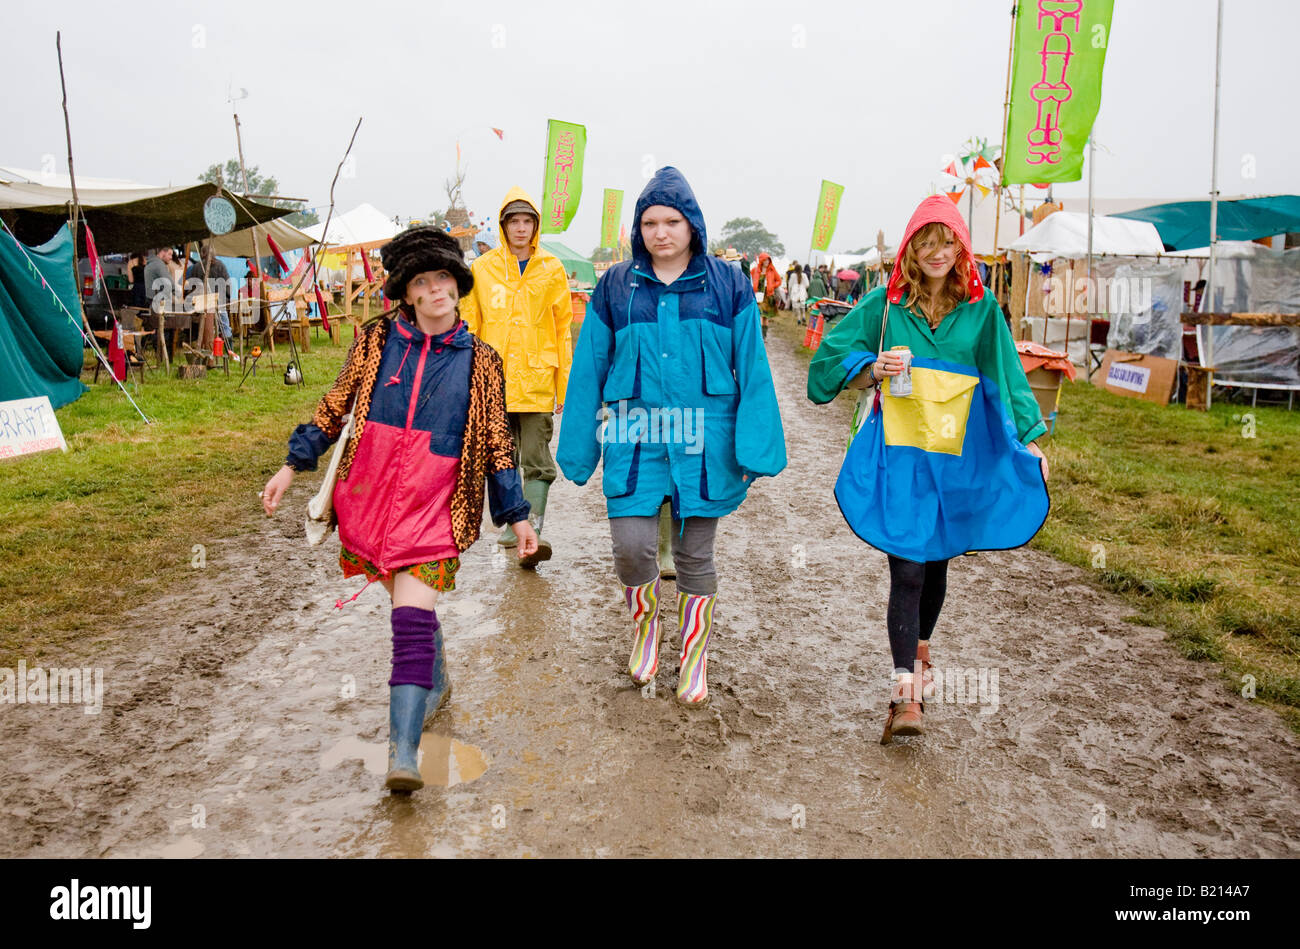 People Walking In Mud Glastonbury Festival Pilton Somerest UK Europe Stock Photo